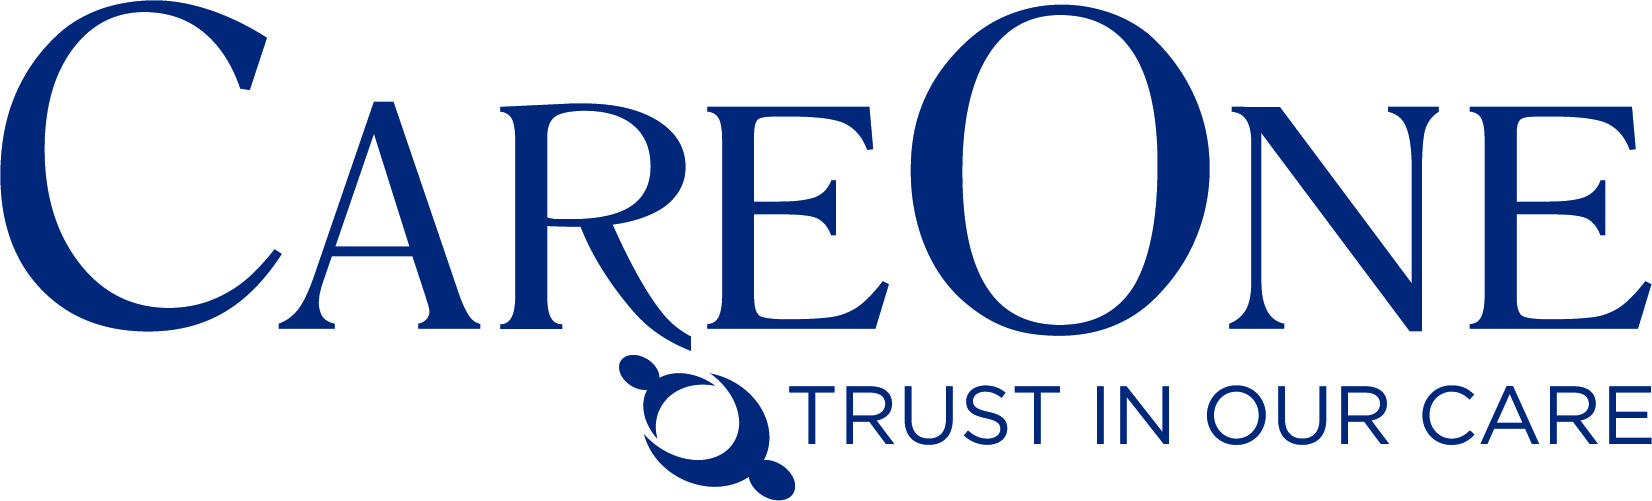 Logotipo corporativo de CareOne_Azul_4c.jpg